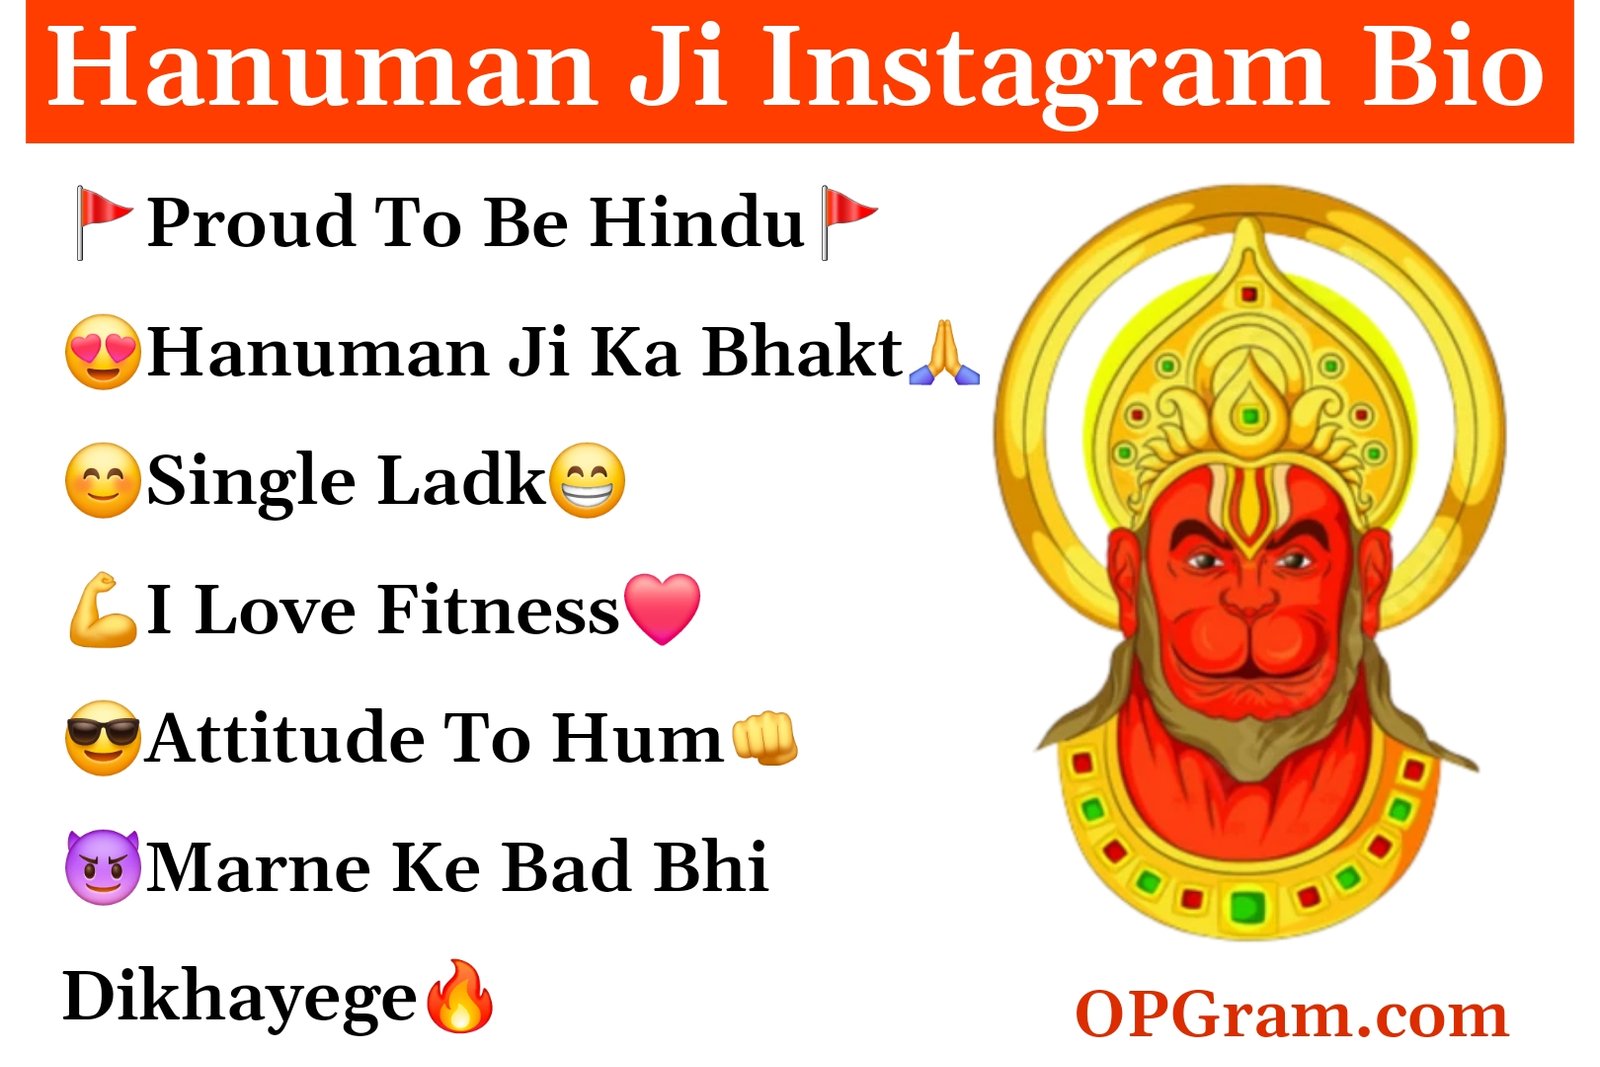 Hanuman ji bio for Instagram